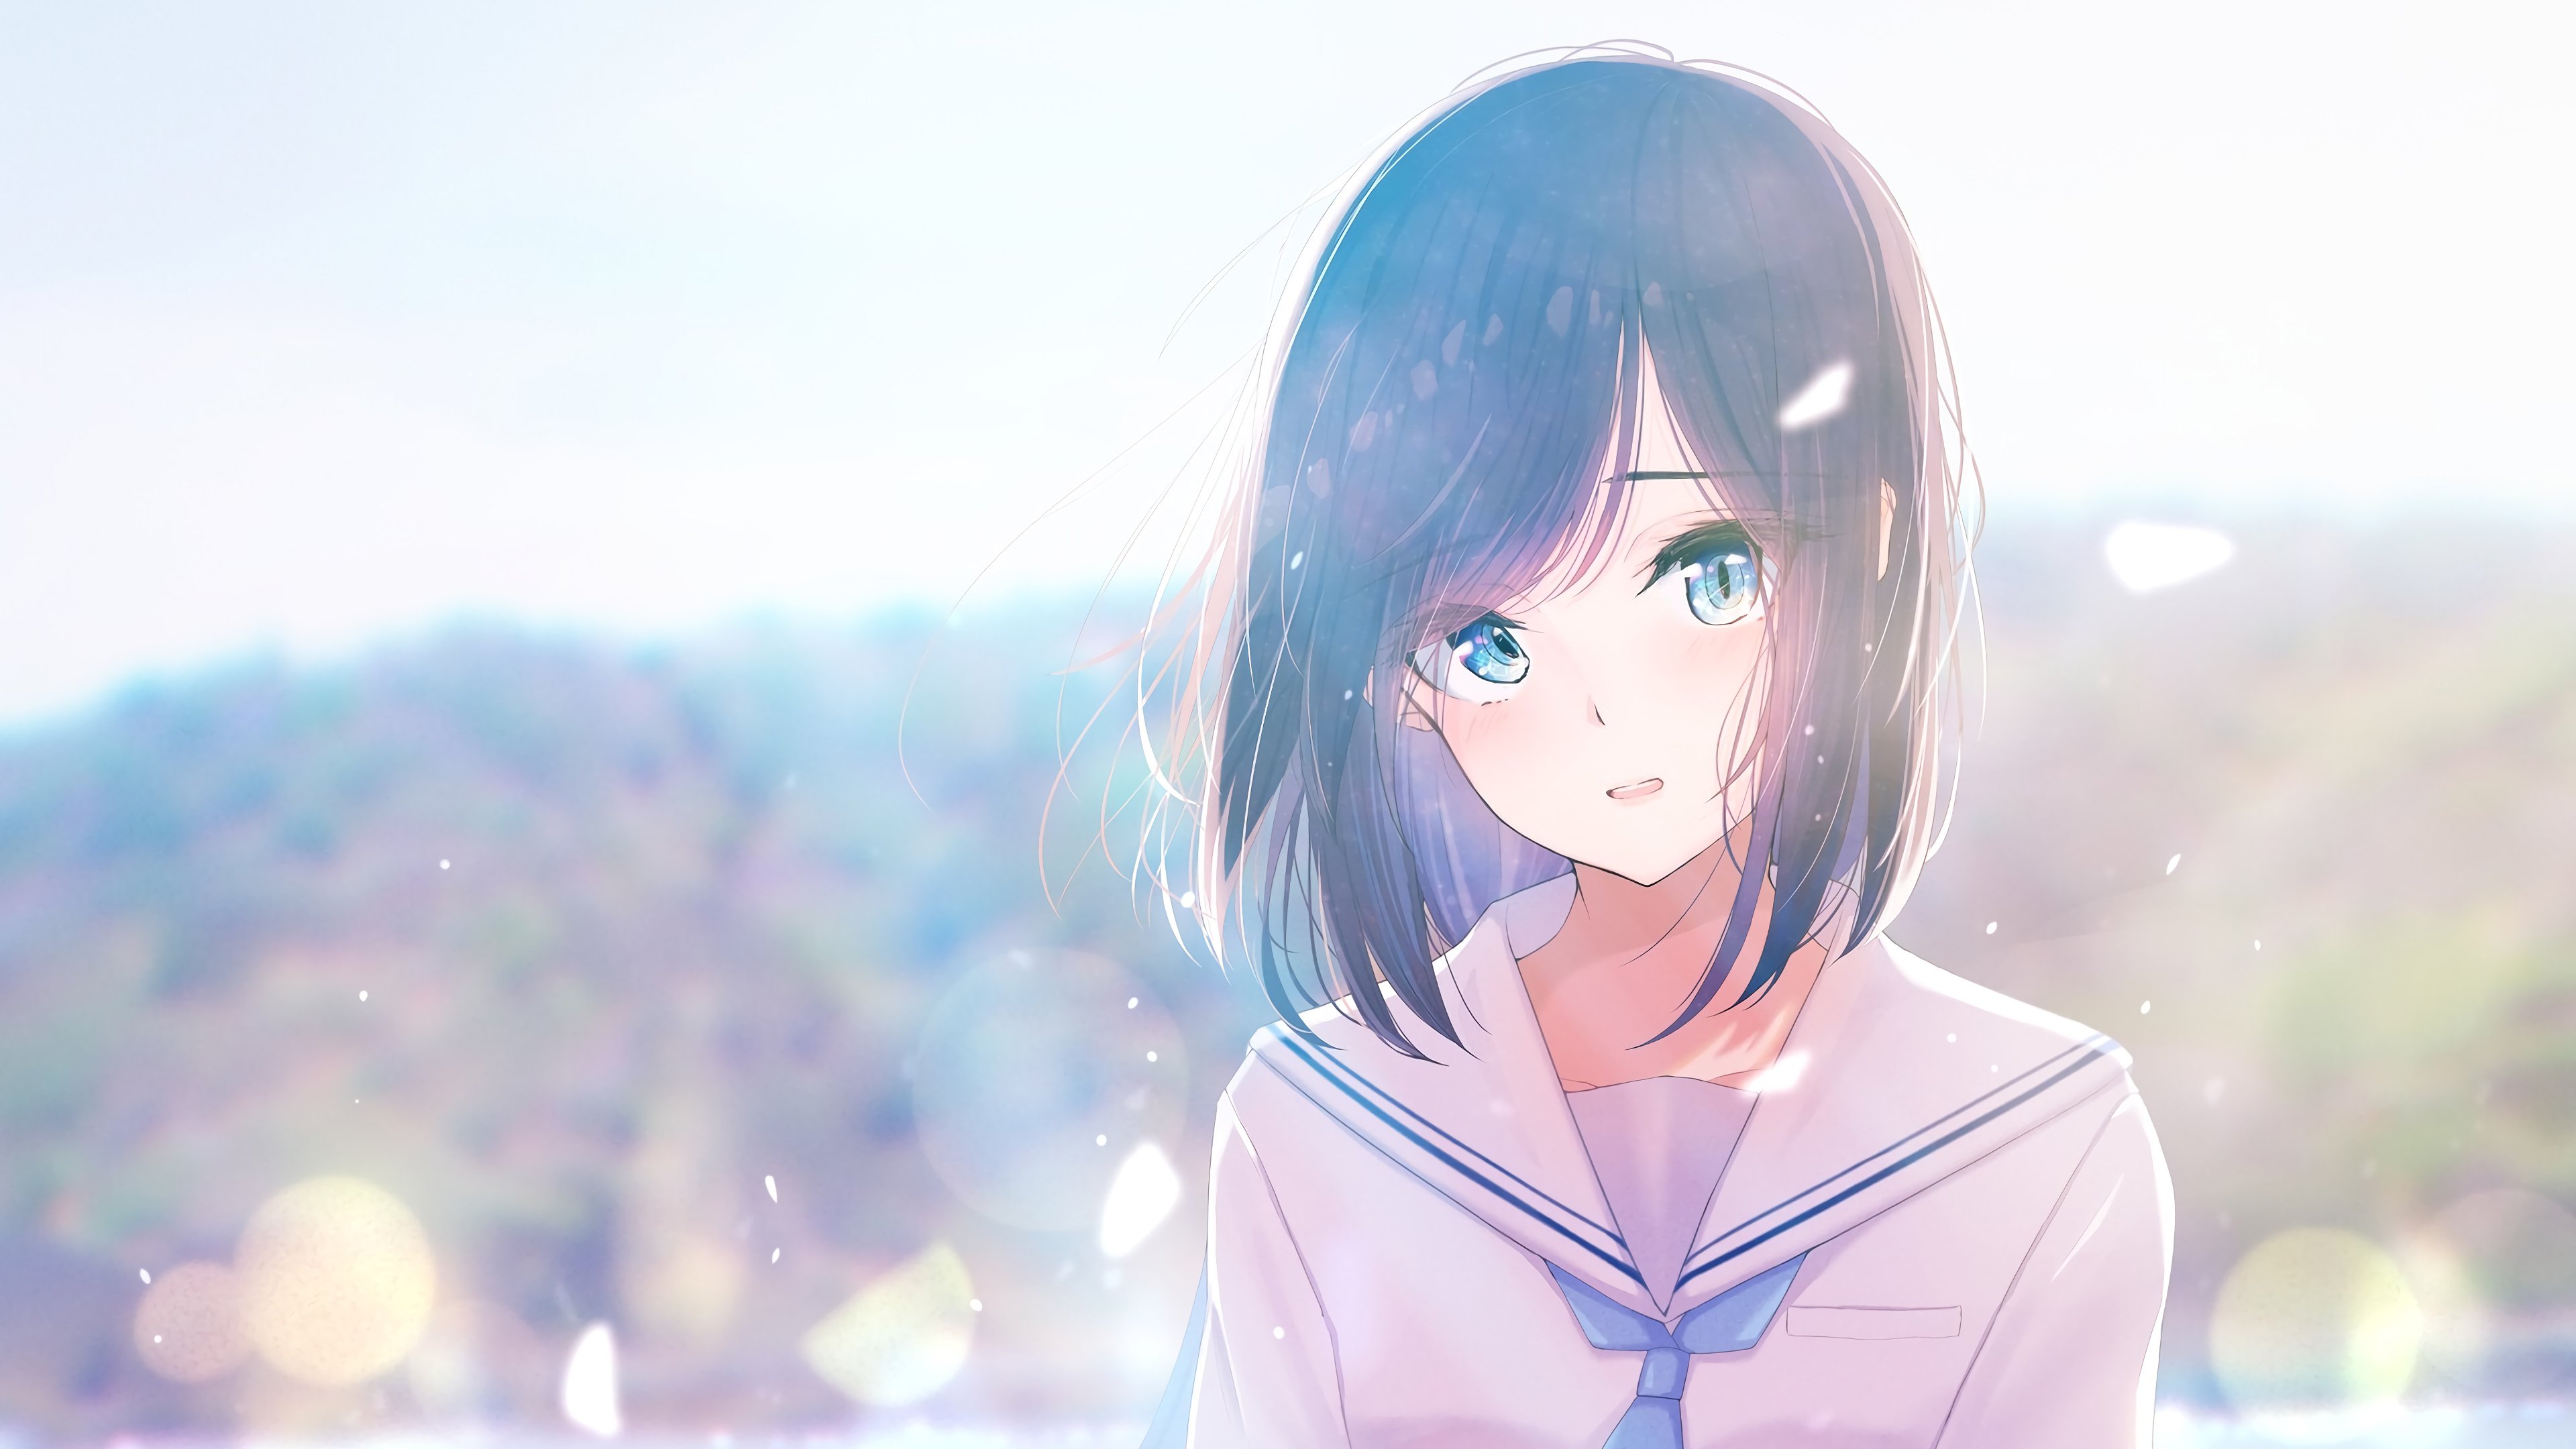 Anime girl student in uniform Wallpaper 4k Ultra HD ID:3723